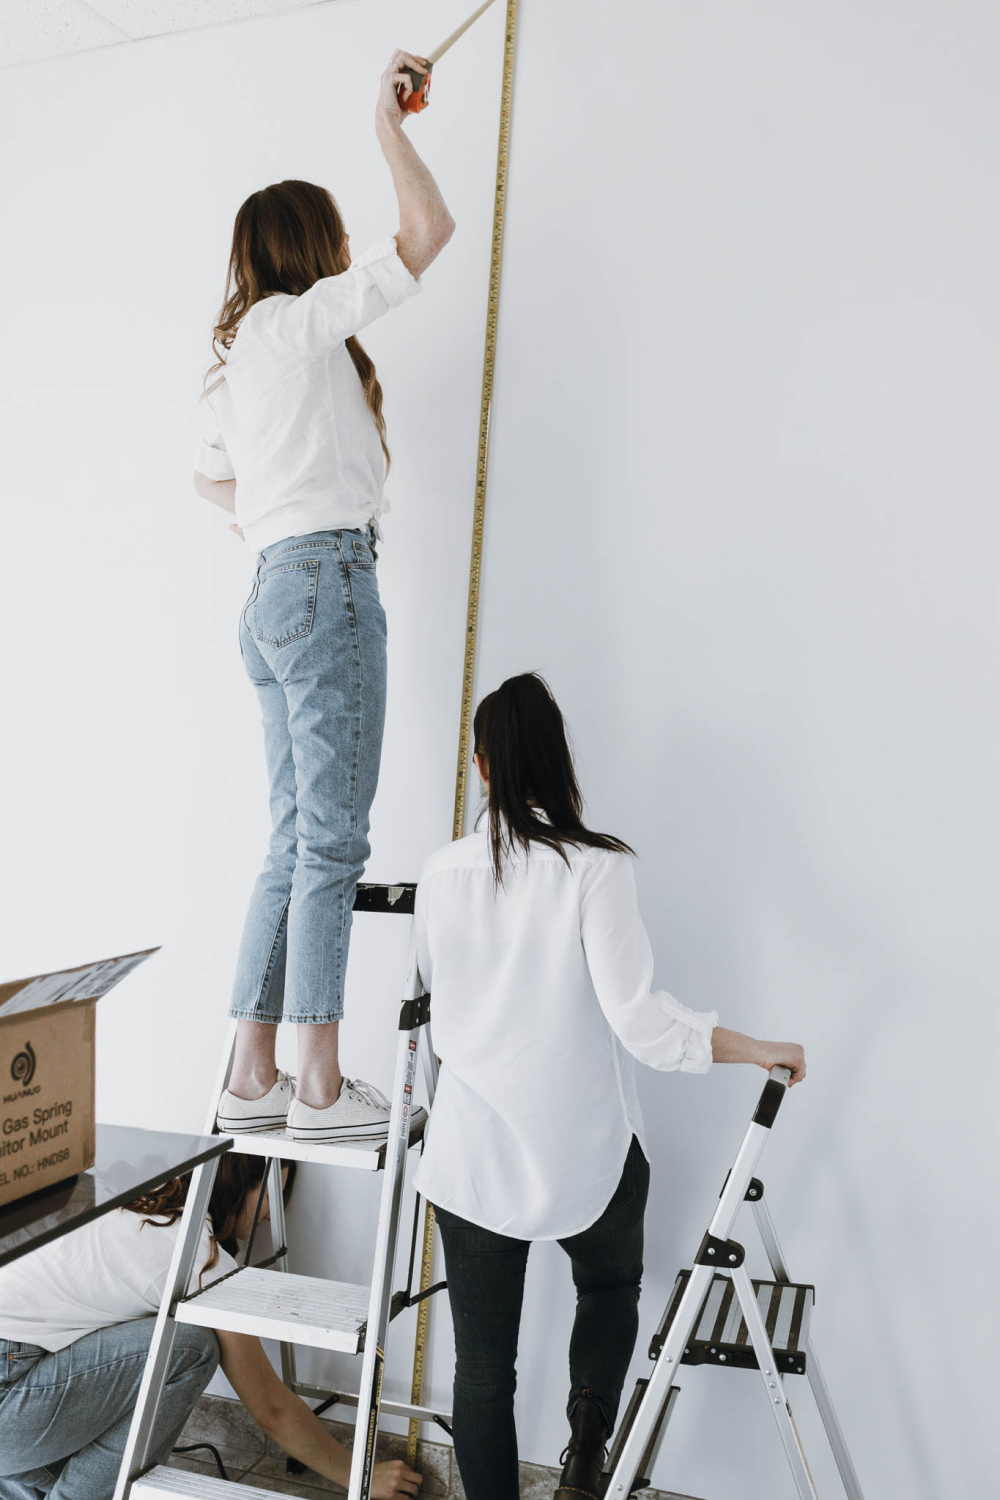 women measuring wall